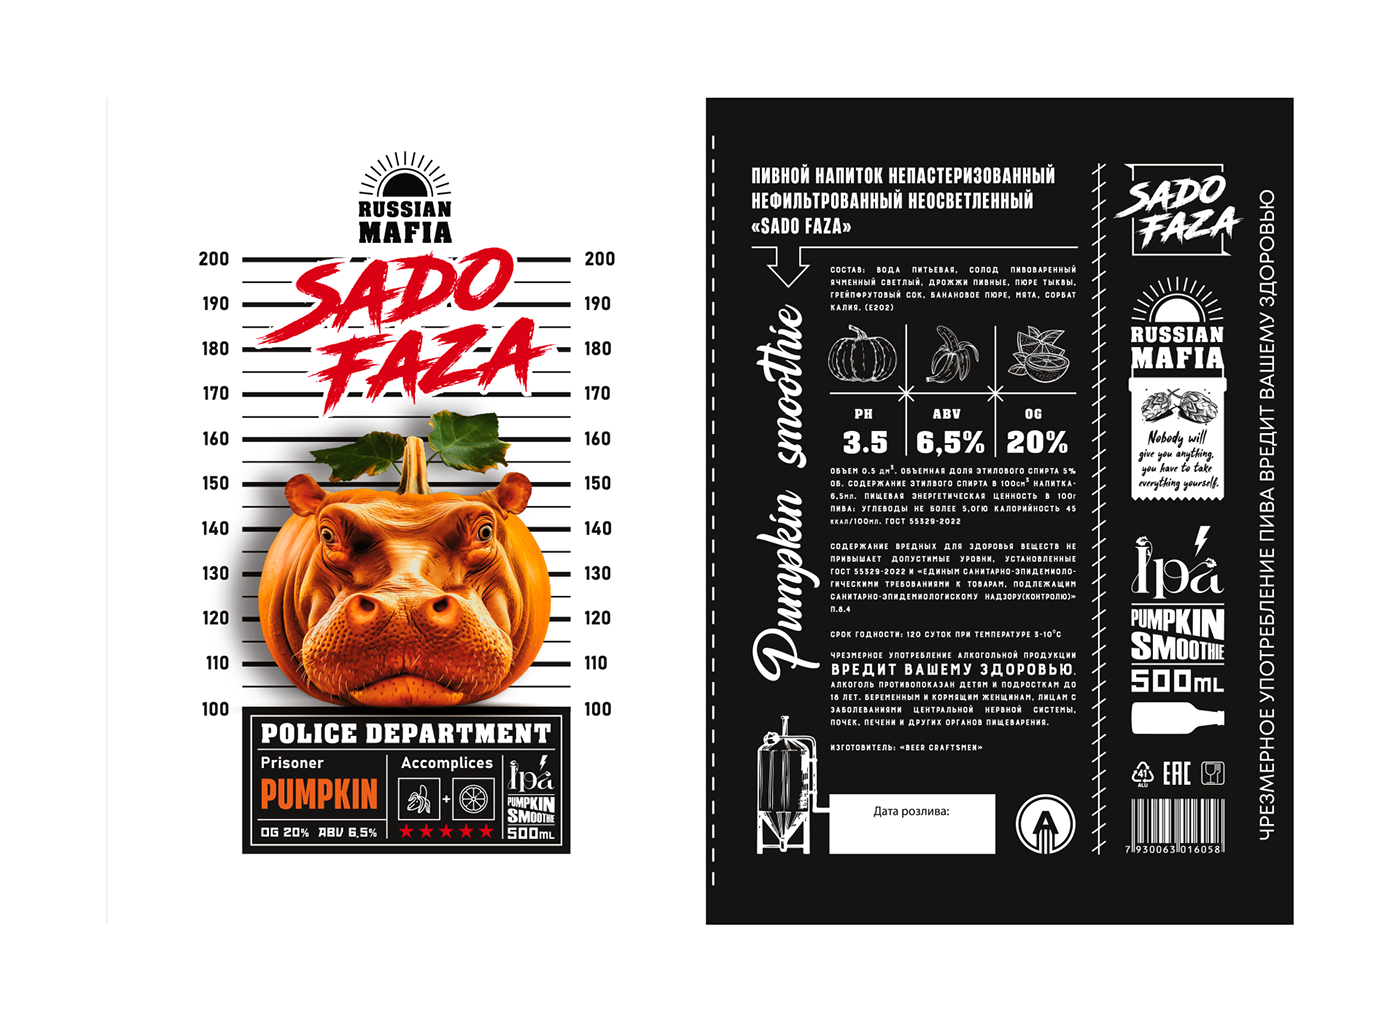 Label Packaging brand identity ILLUSTRATION  cans beer design marketing   Graphic Designer visual identity